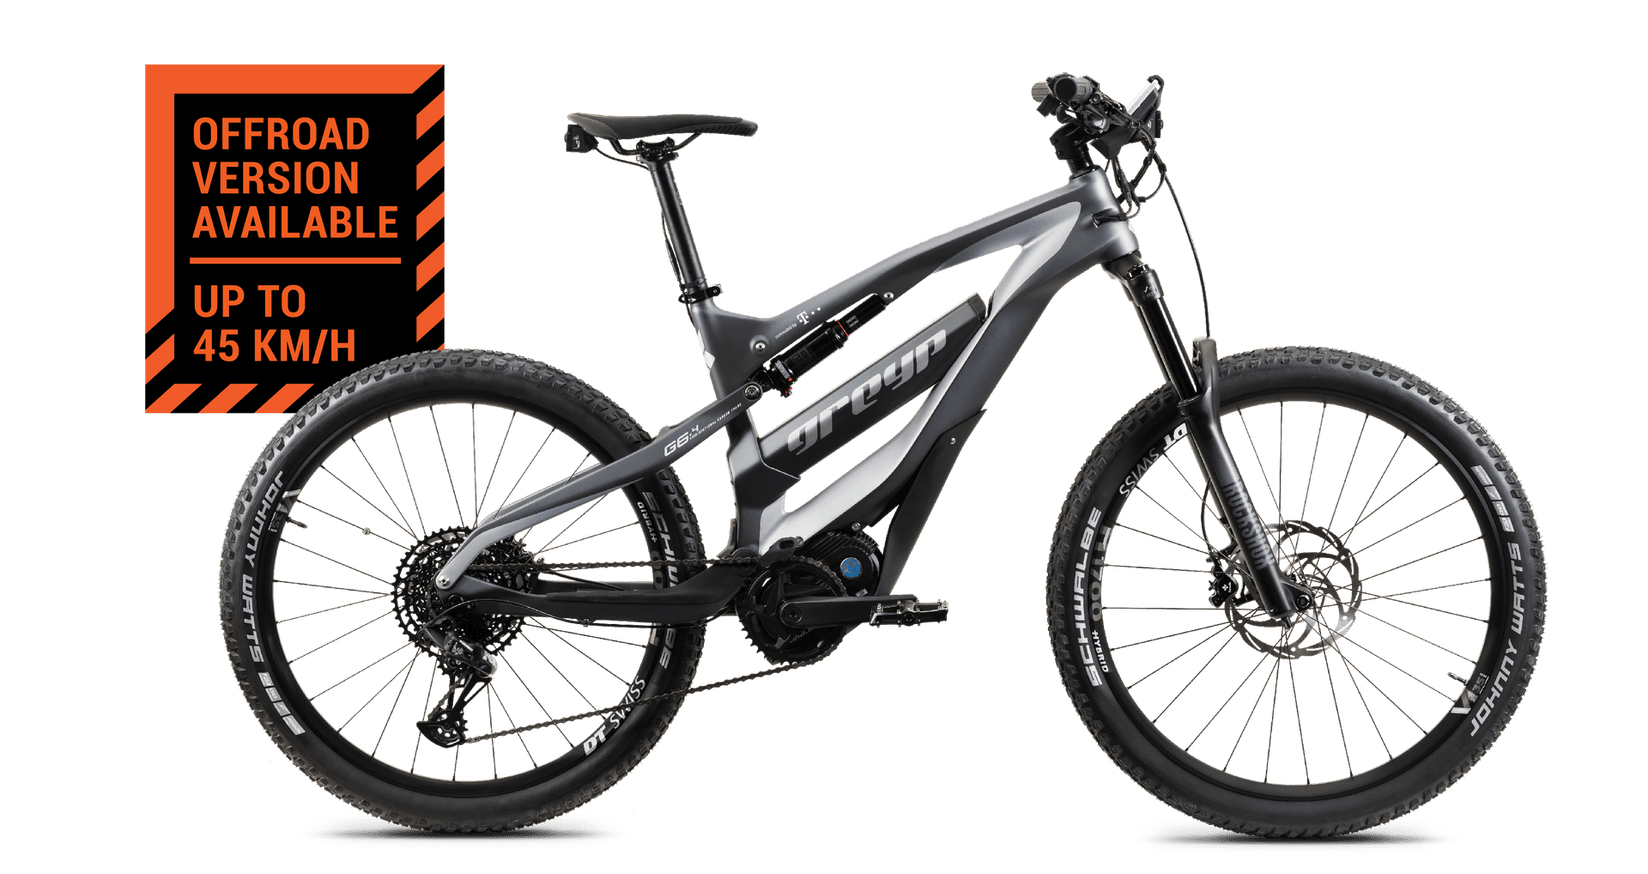 GREYP(RIMAC) e-Велосипед G6.4, 45km/h, L